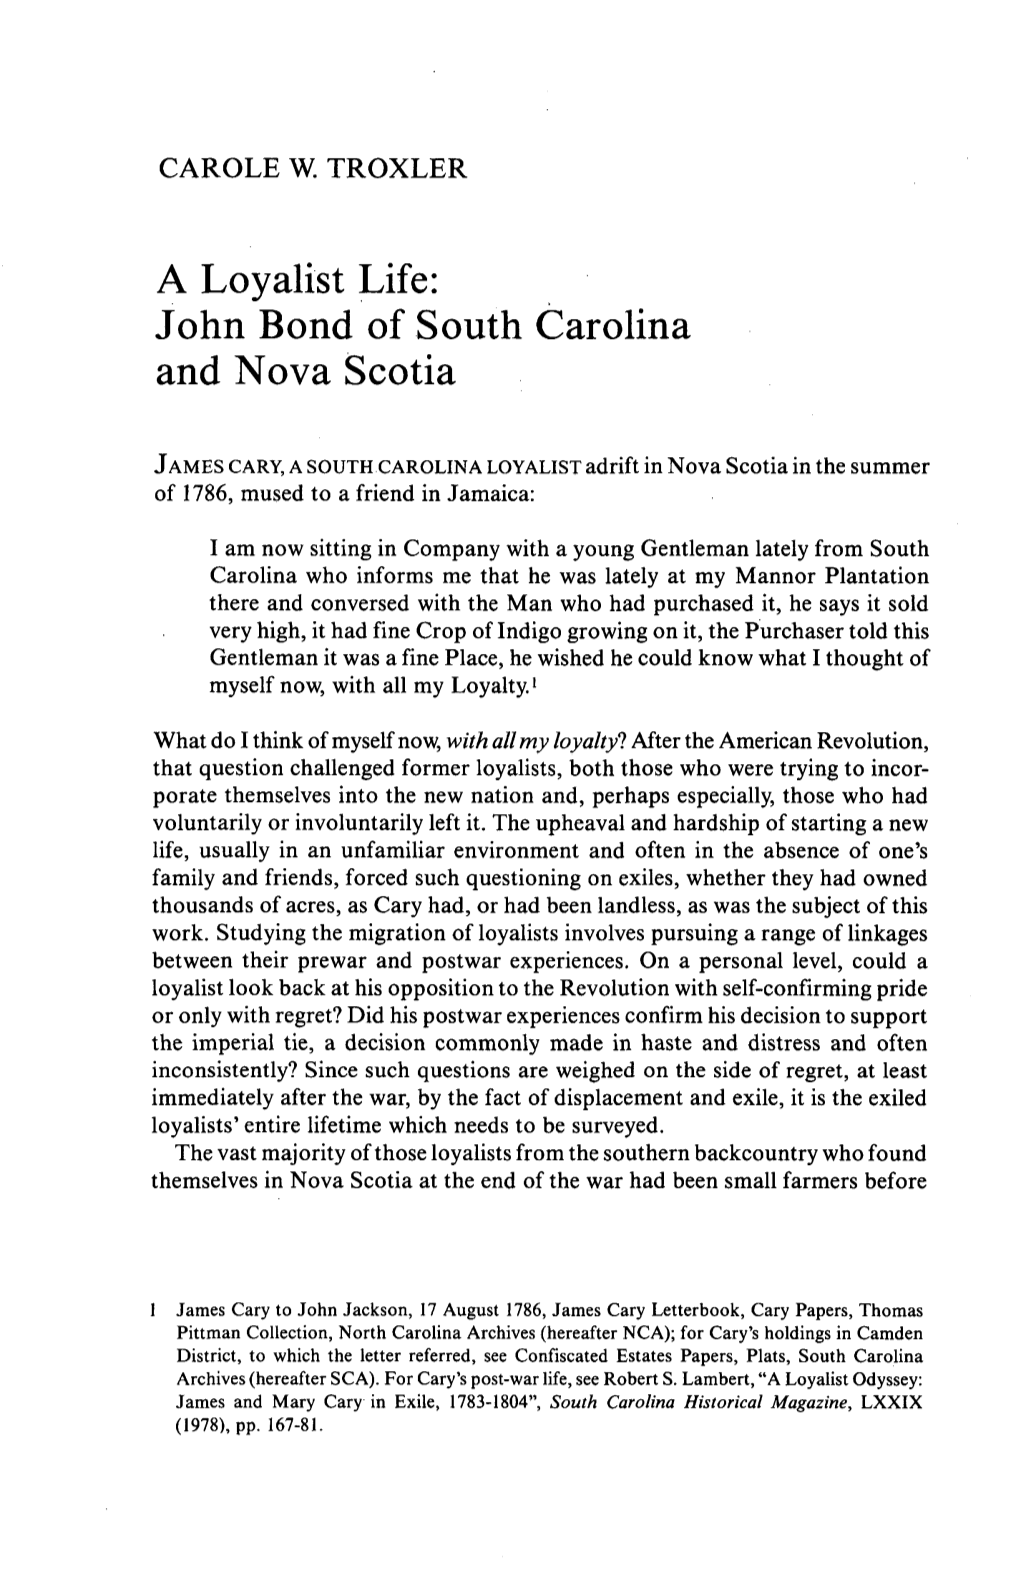 A Loyalist Life: John Bond of South Carolina and Nova Scotia